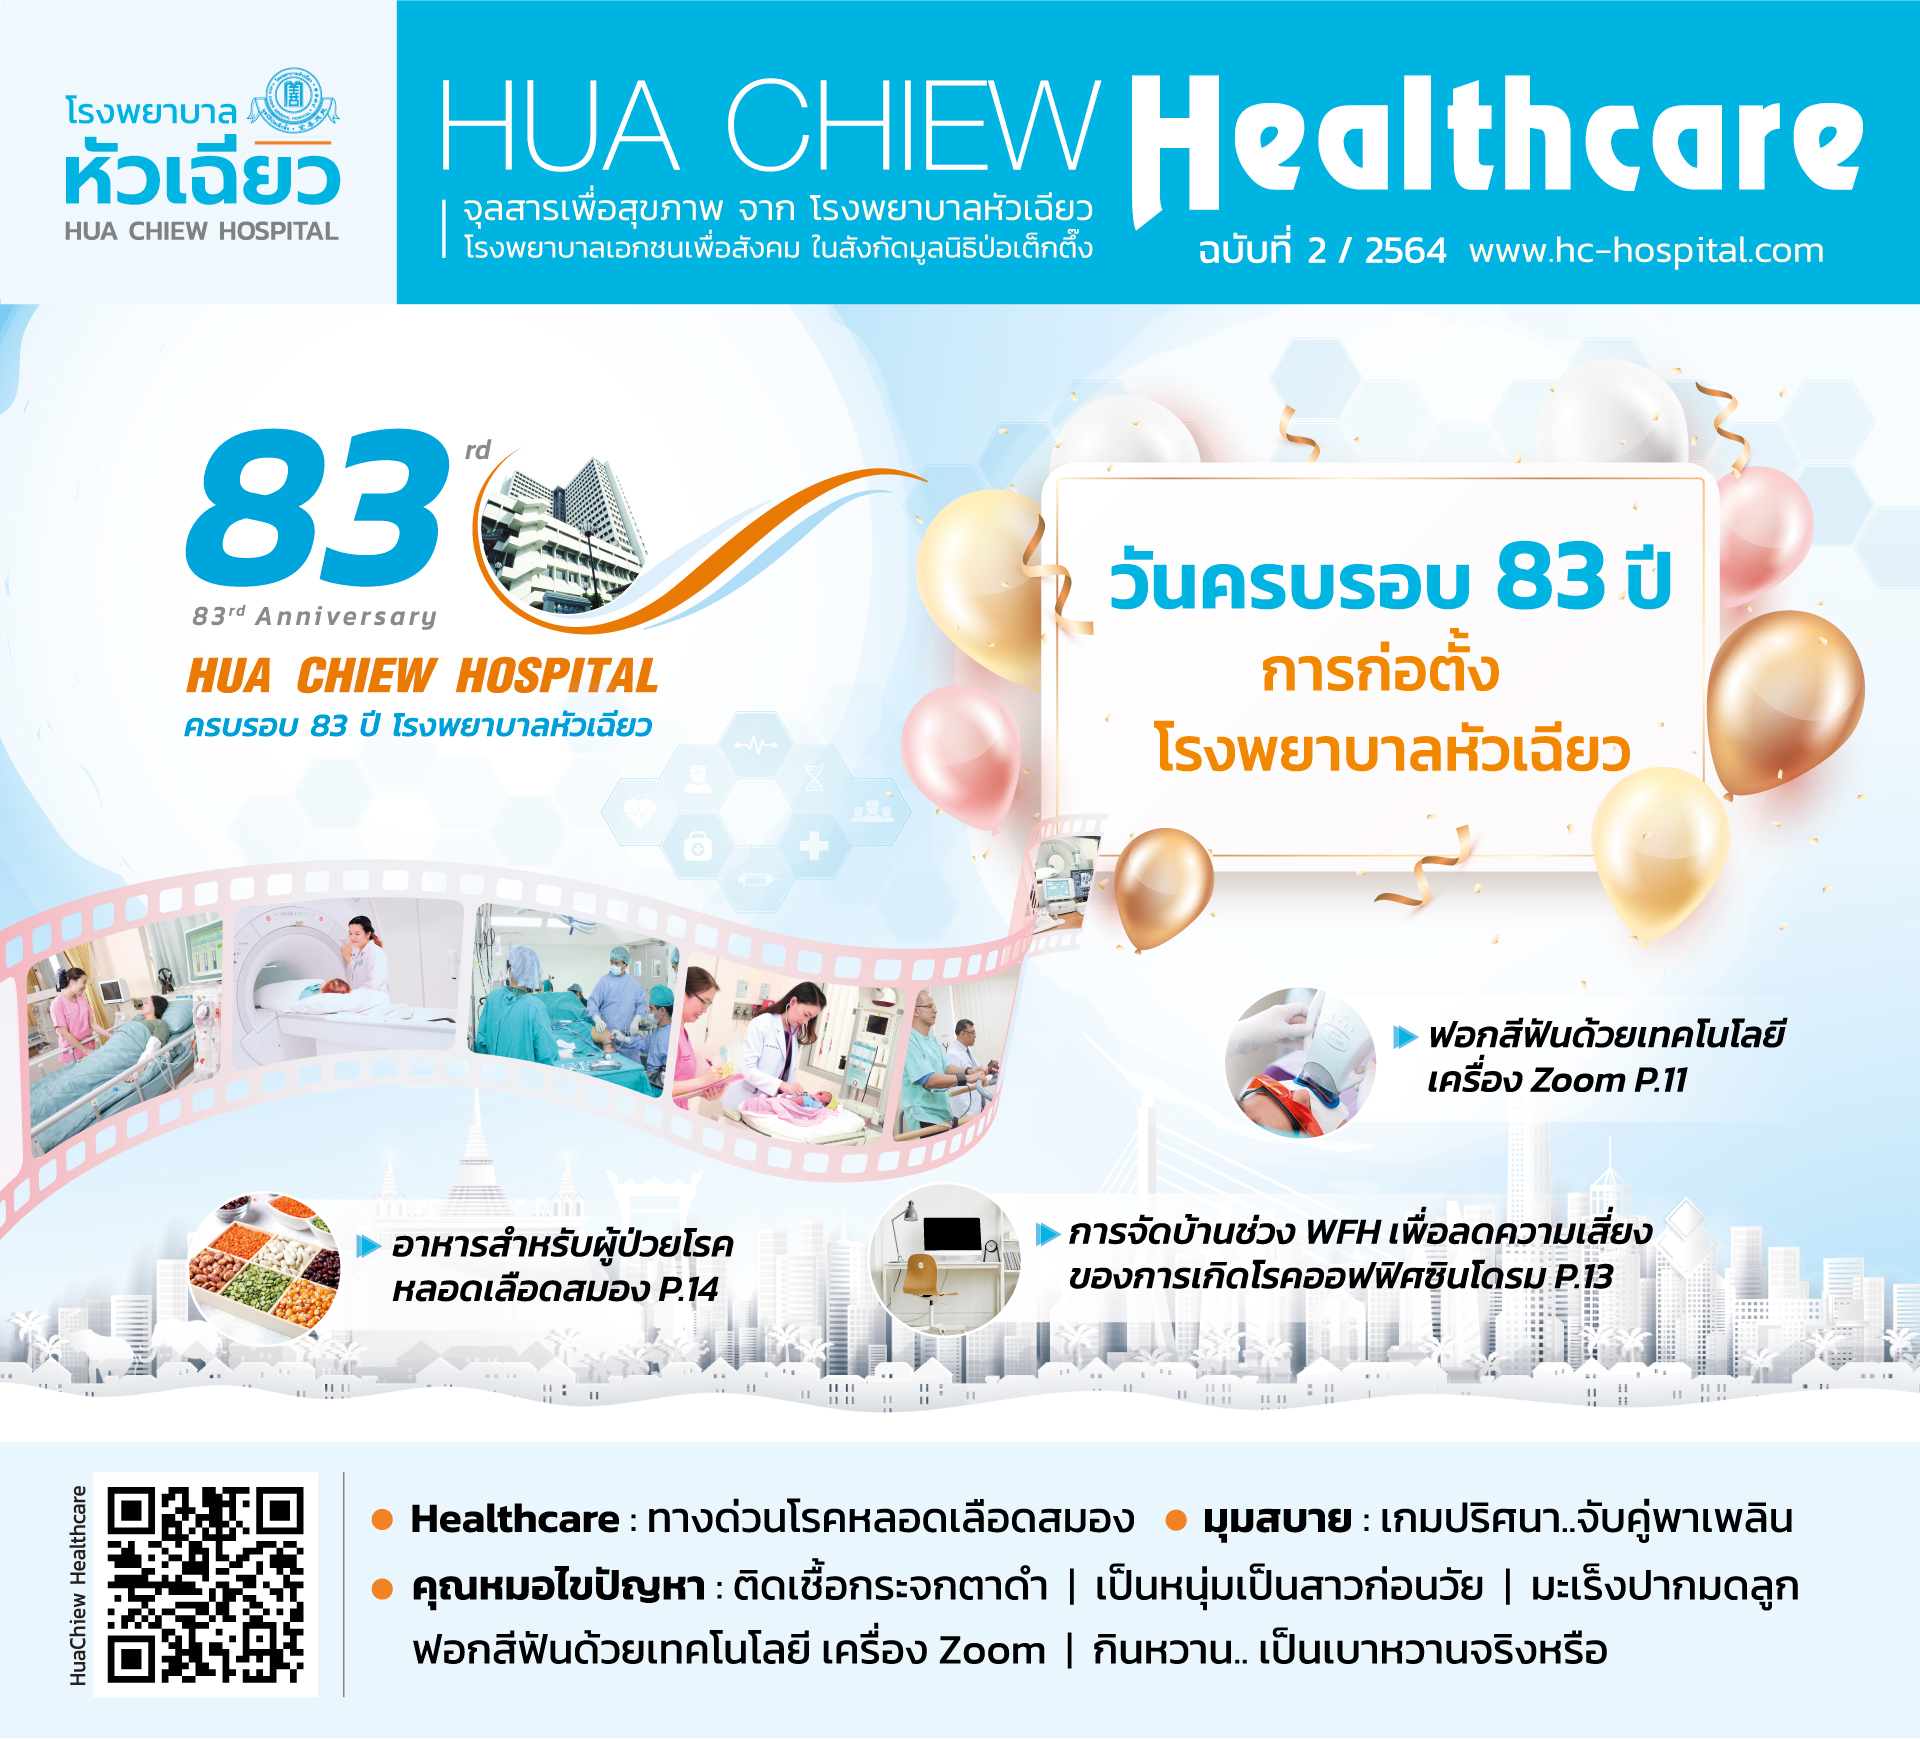 hua chiew healthcare, จุลสาร, โรงพยาบาลหัวเฉียว